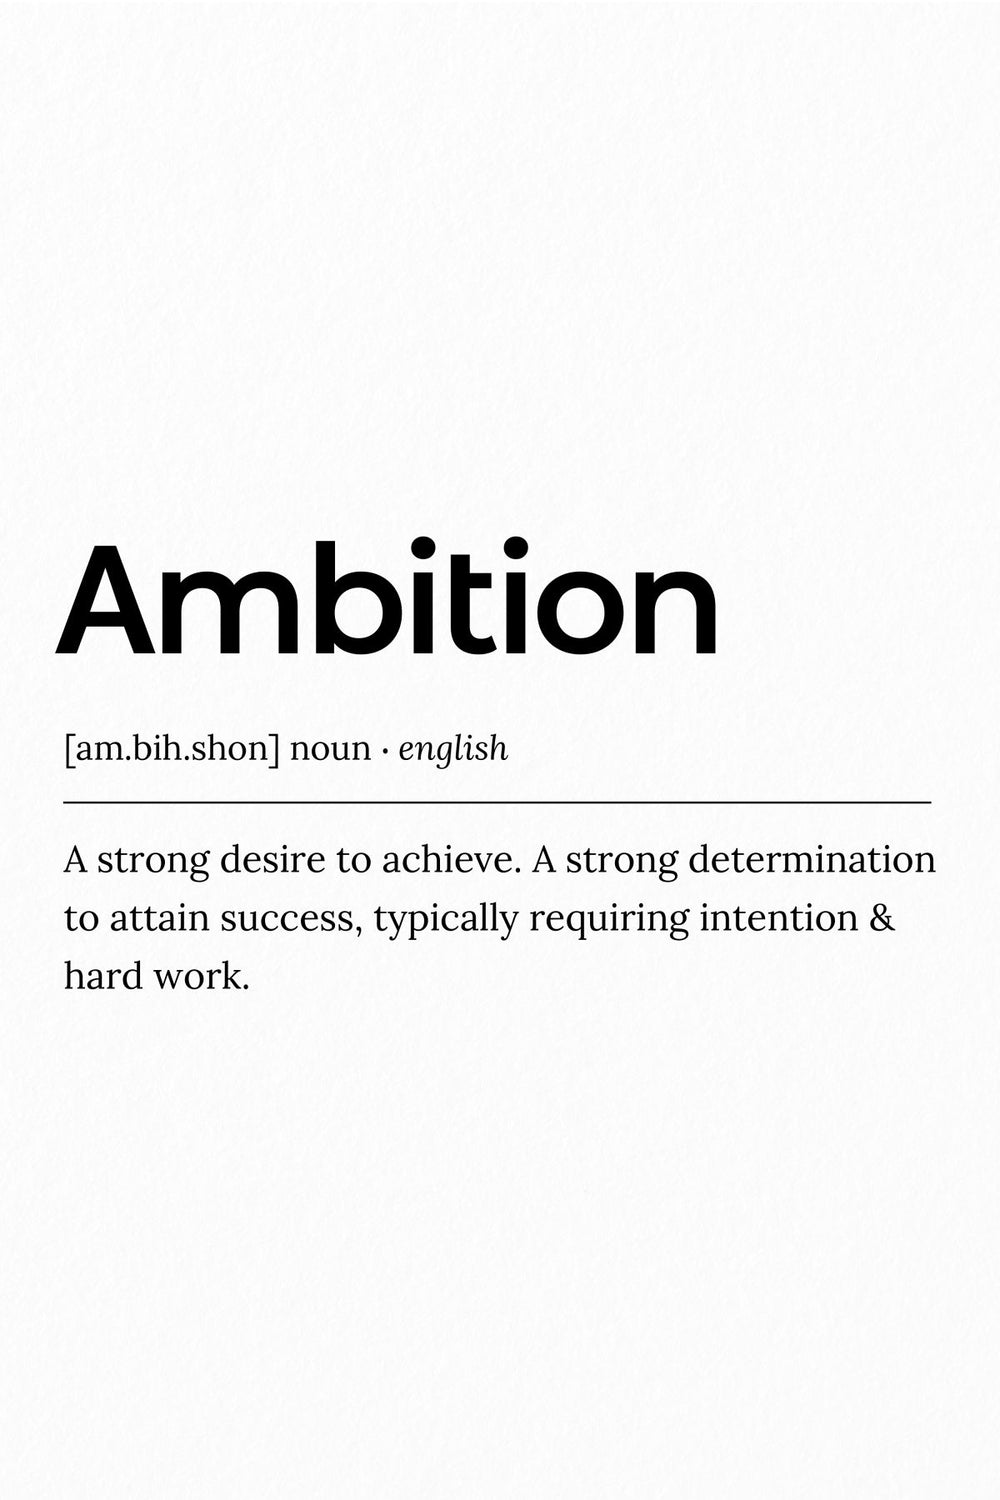 Ambition Definition Light